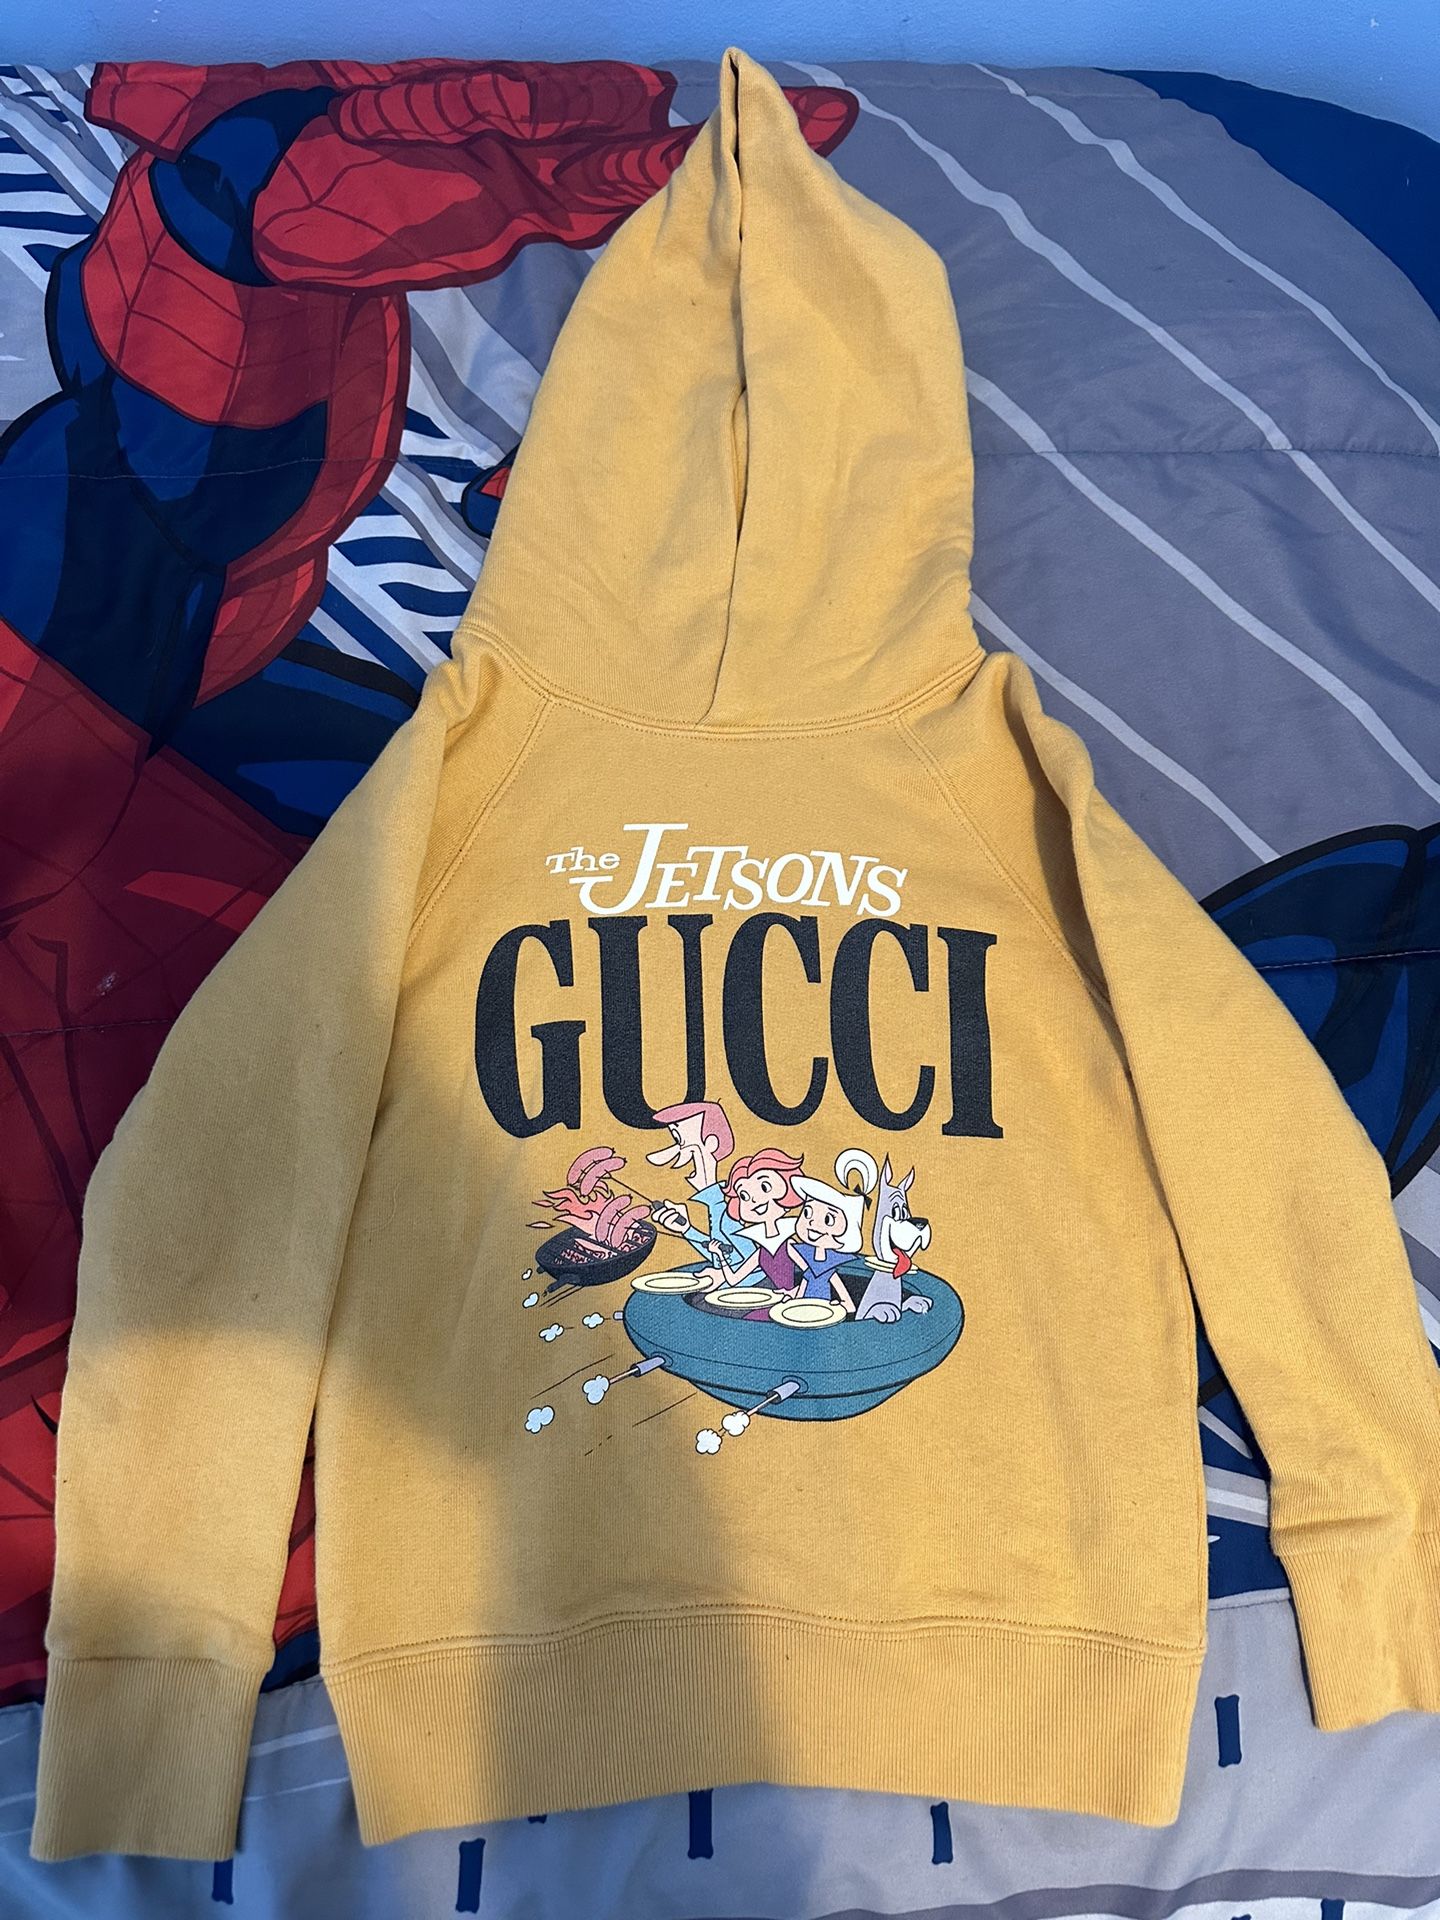 Kids Gucci Sweat Size 8 (worn once)